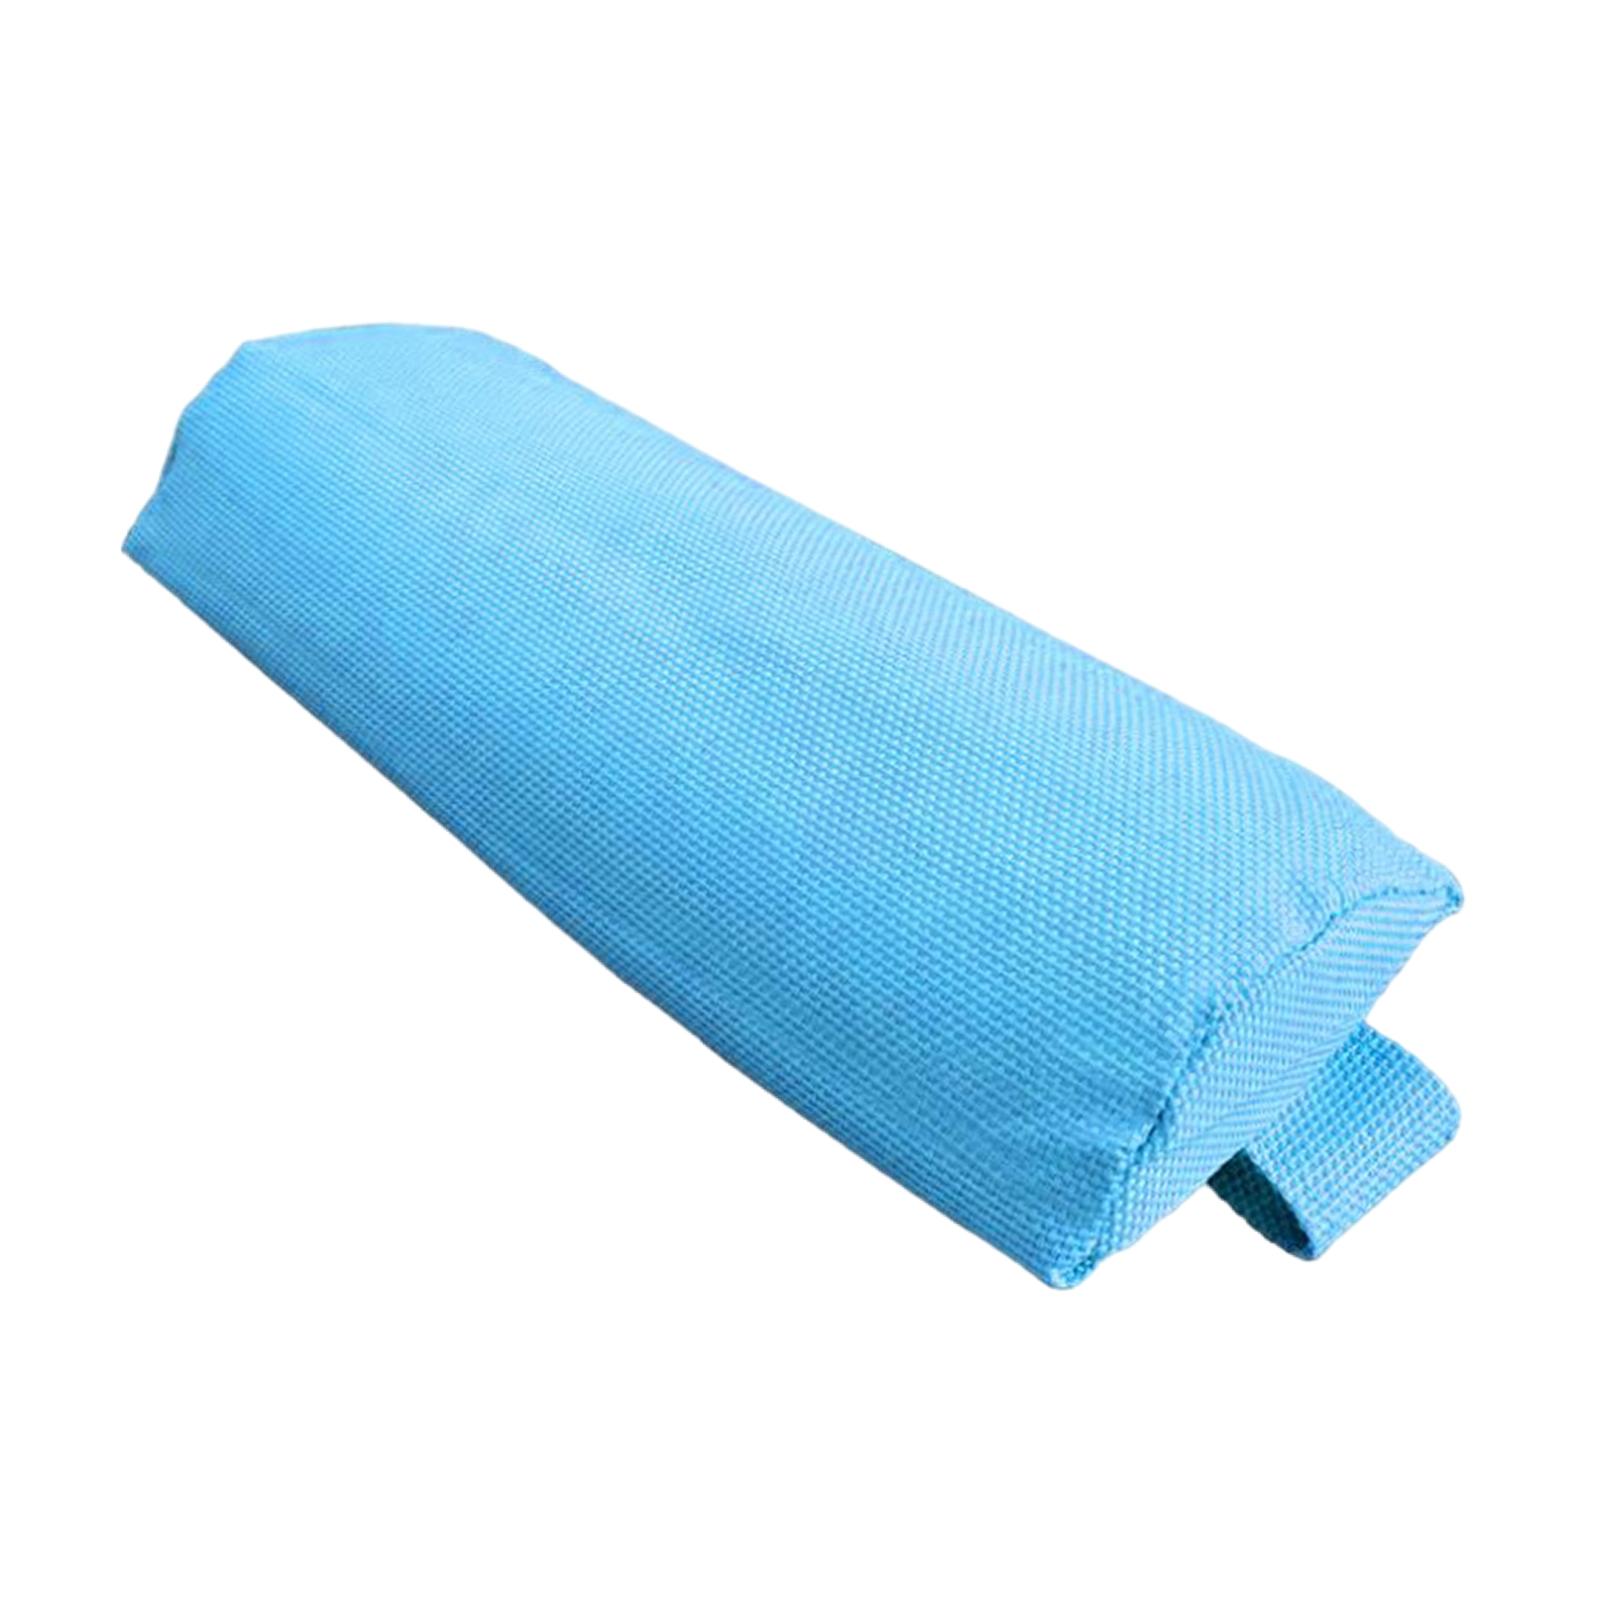 Comfortable Head Cushion Pillow for Folding Chair Beach Patio Chair Headrest blue - image 2 of 6